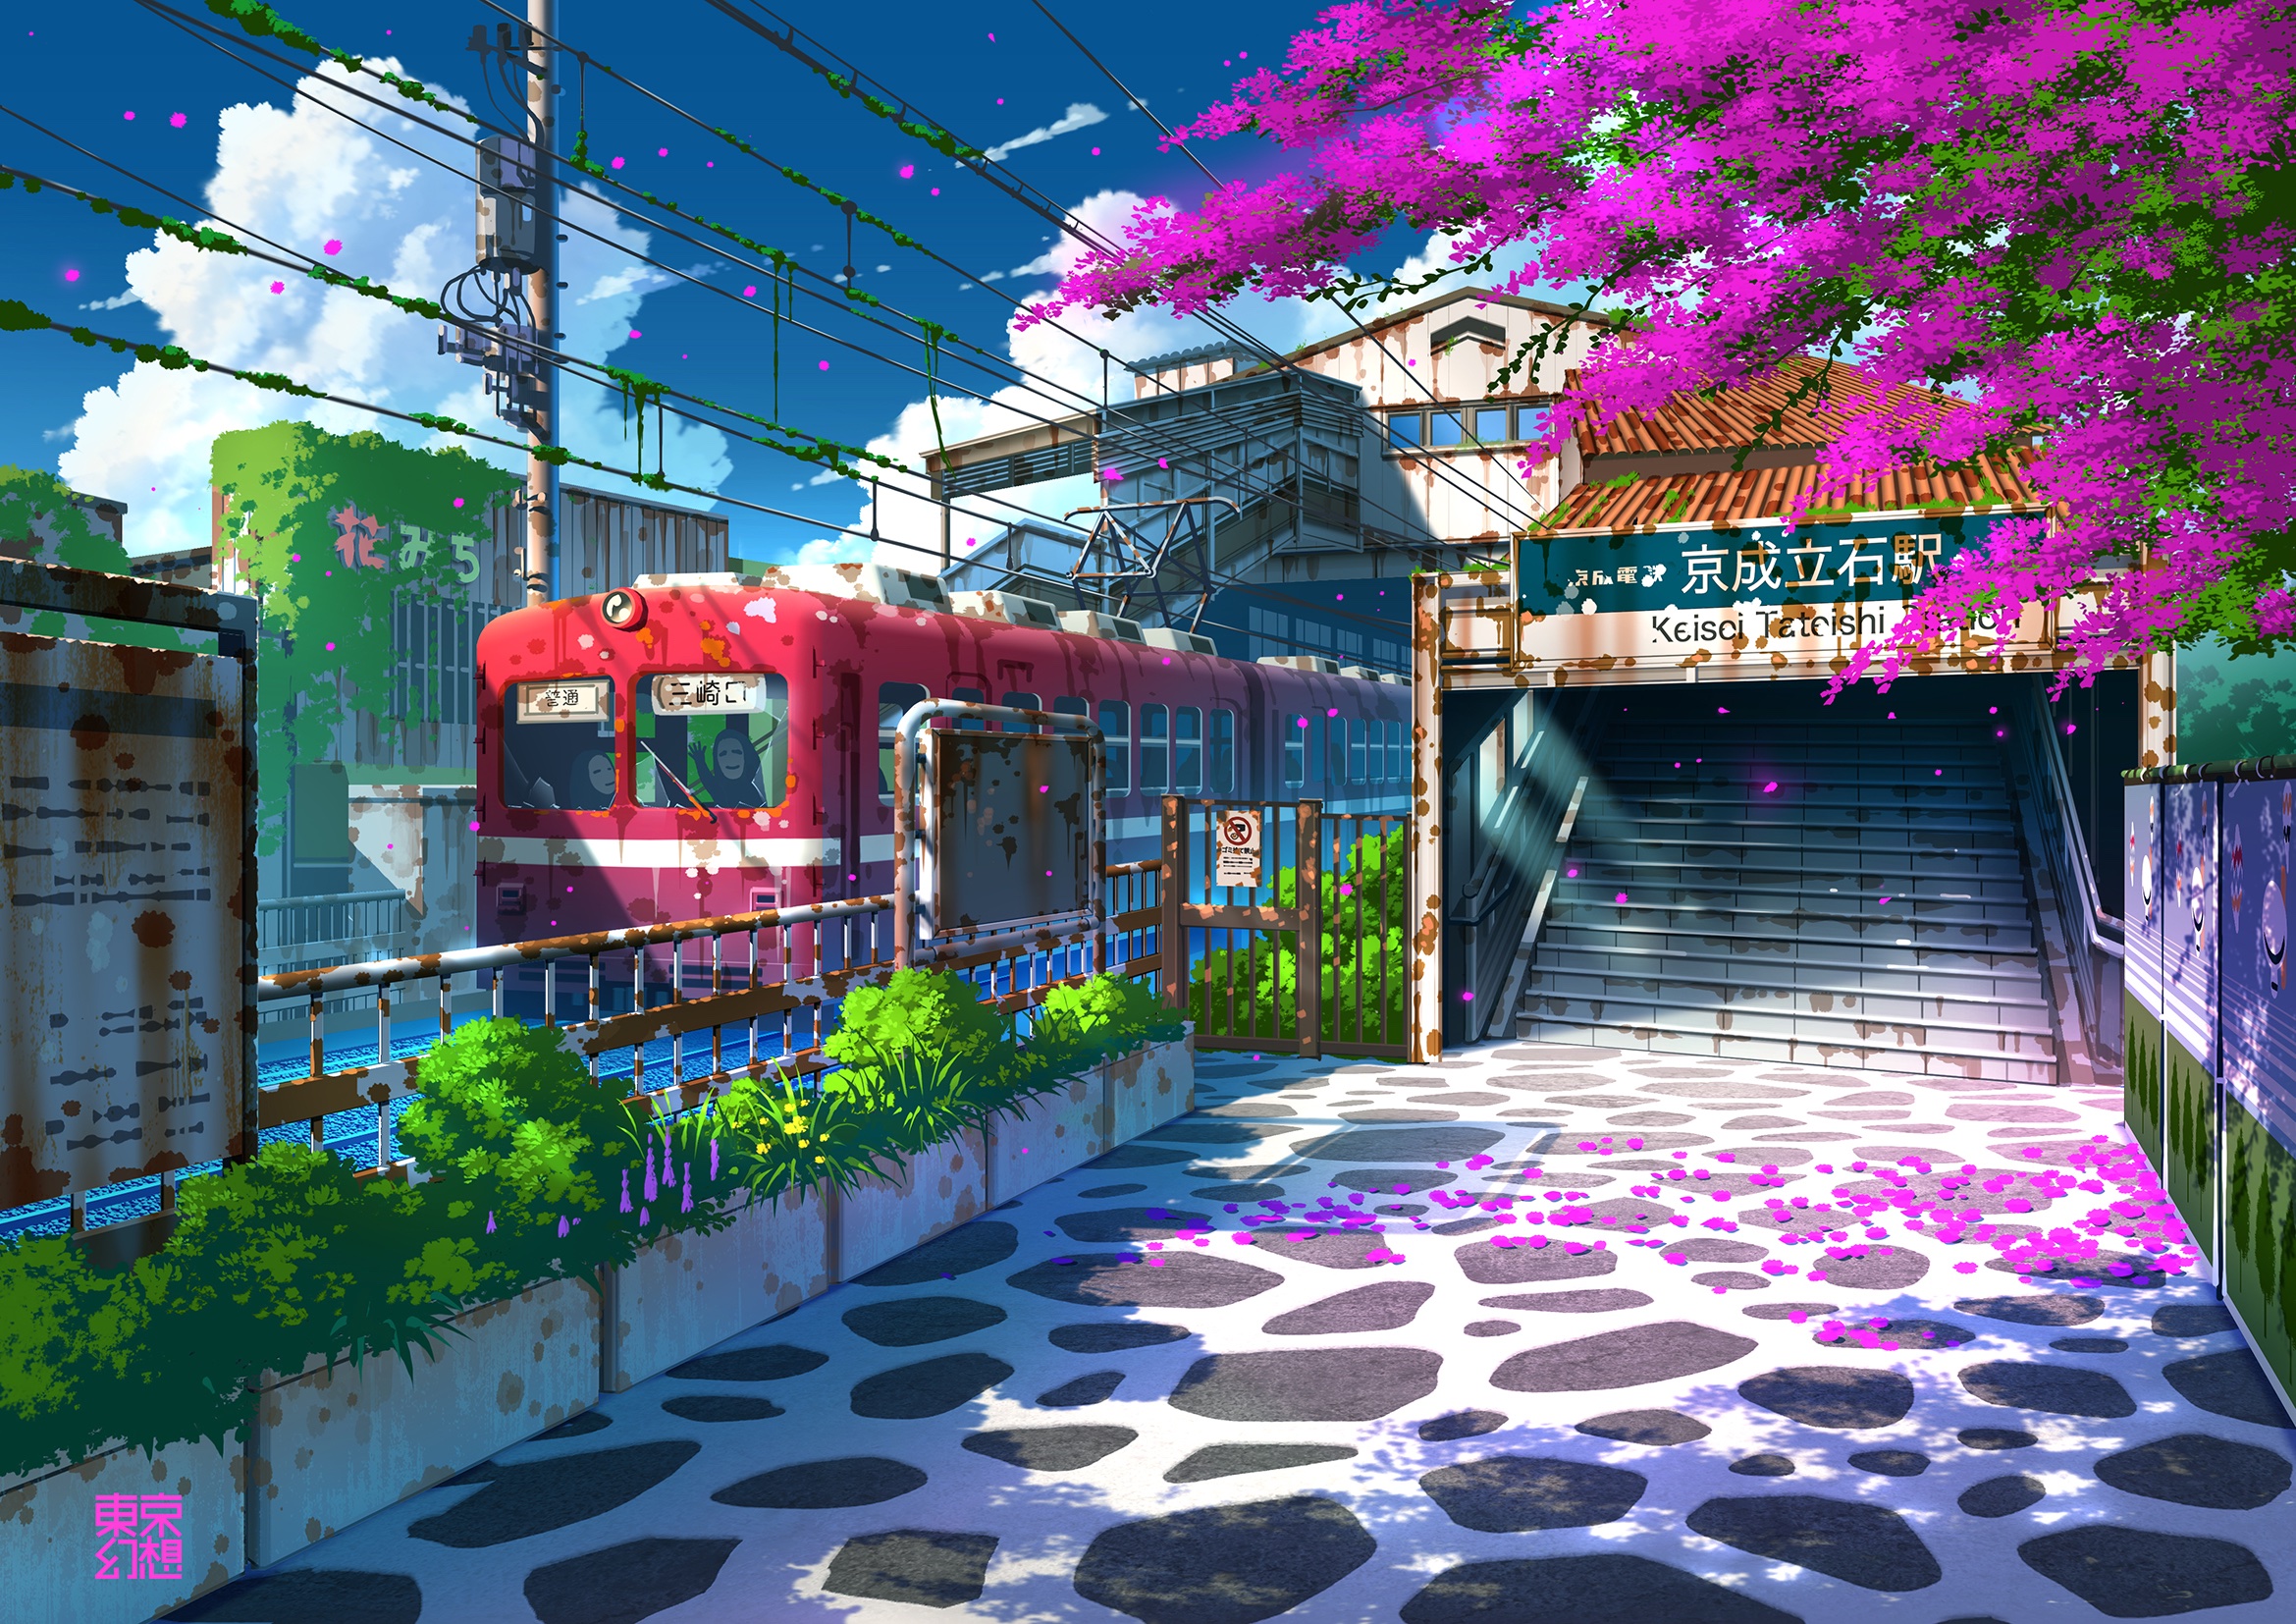 Digital Art Artwork Illustration Environment Train Station Train Clouds Plants Colorful Trees Petals 2339x1654